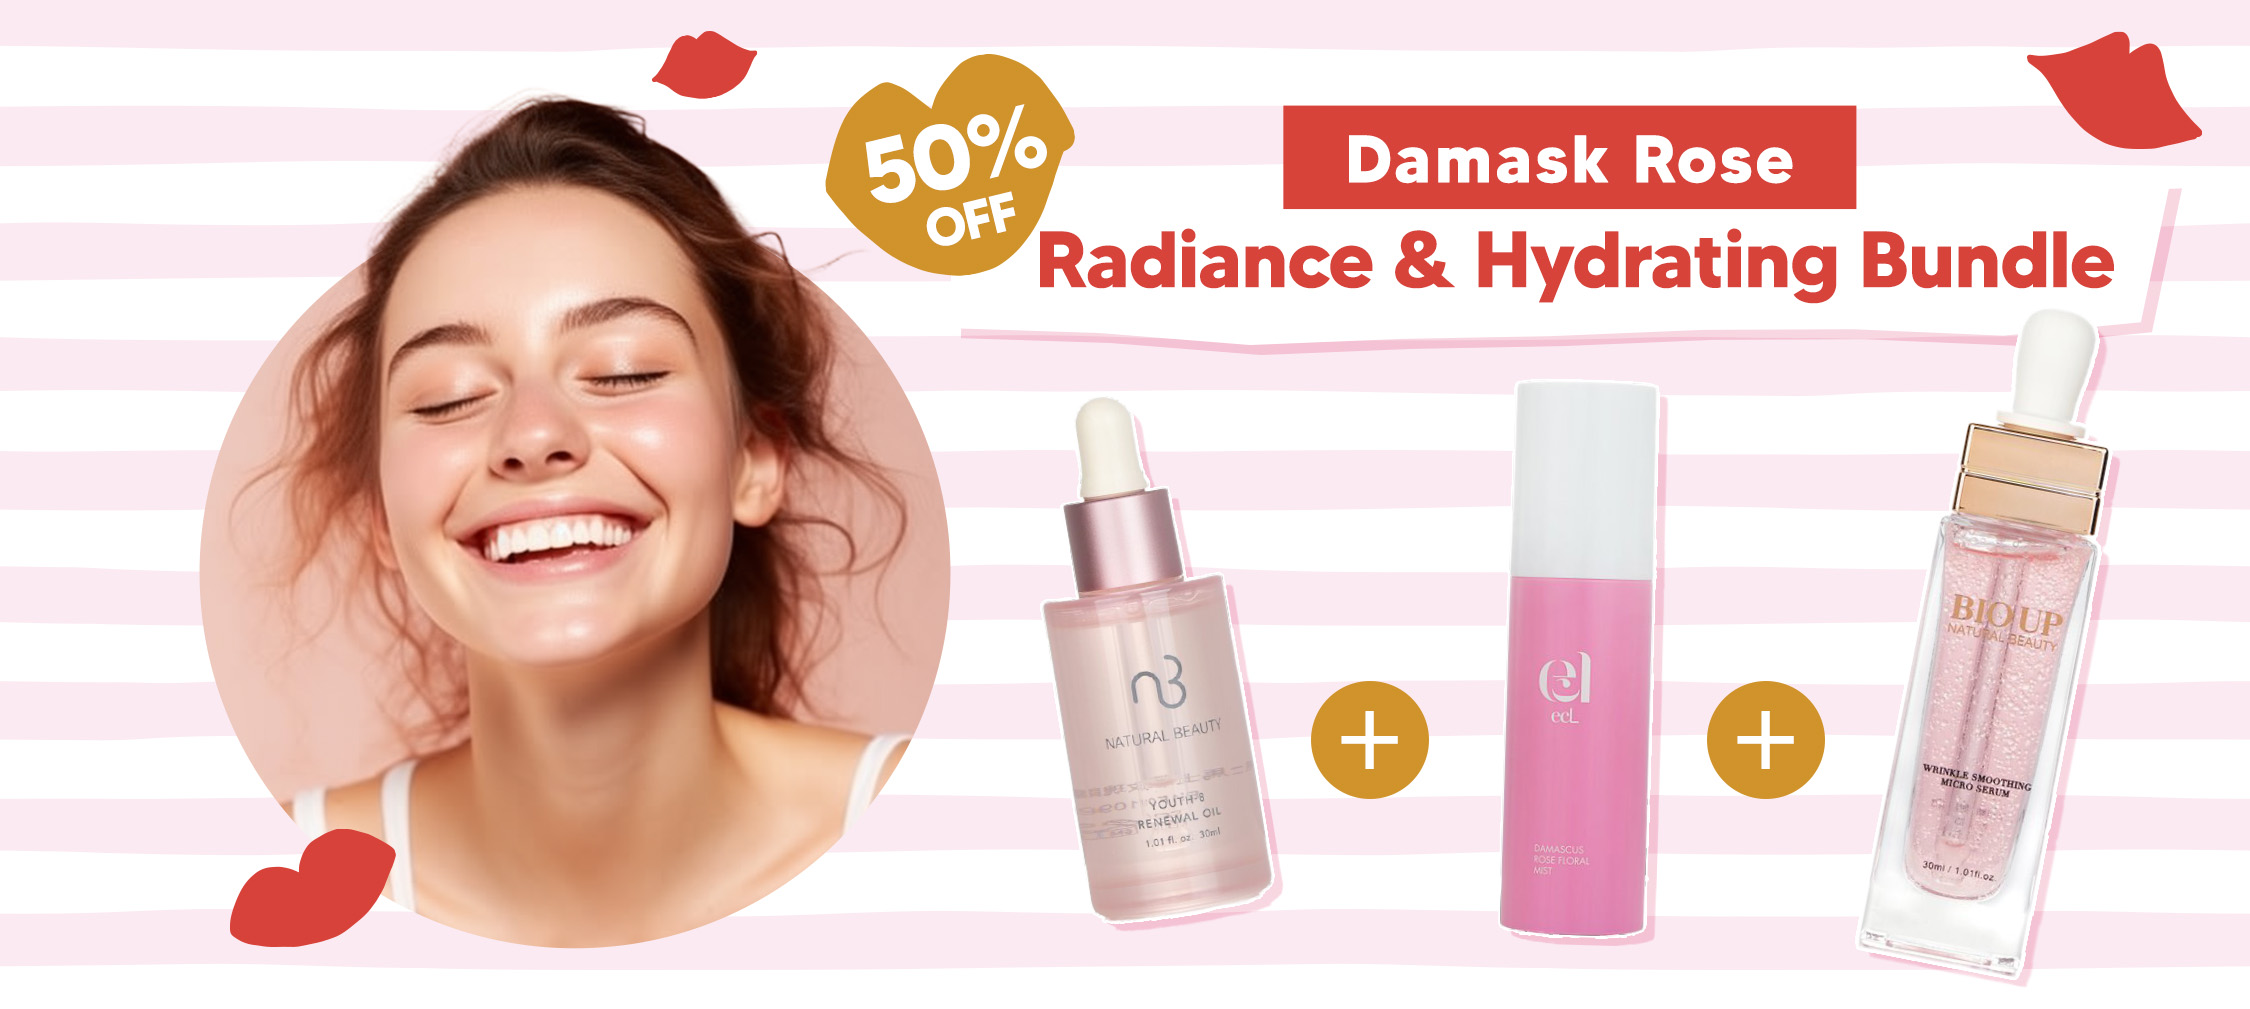 Home Spa | Say Goodbye to Your Desert-like Skin! Damask Rose Radiance & Hydrating Bundle 